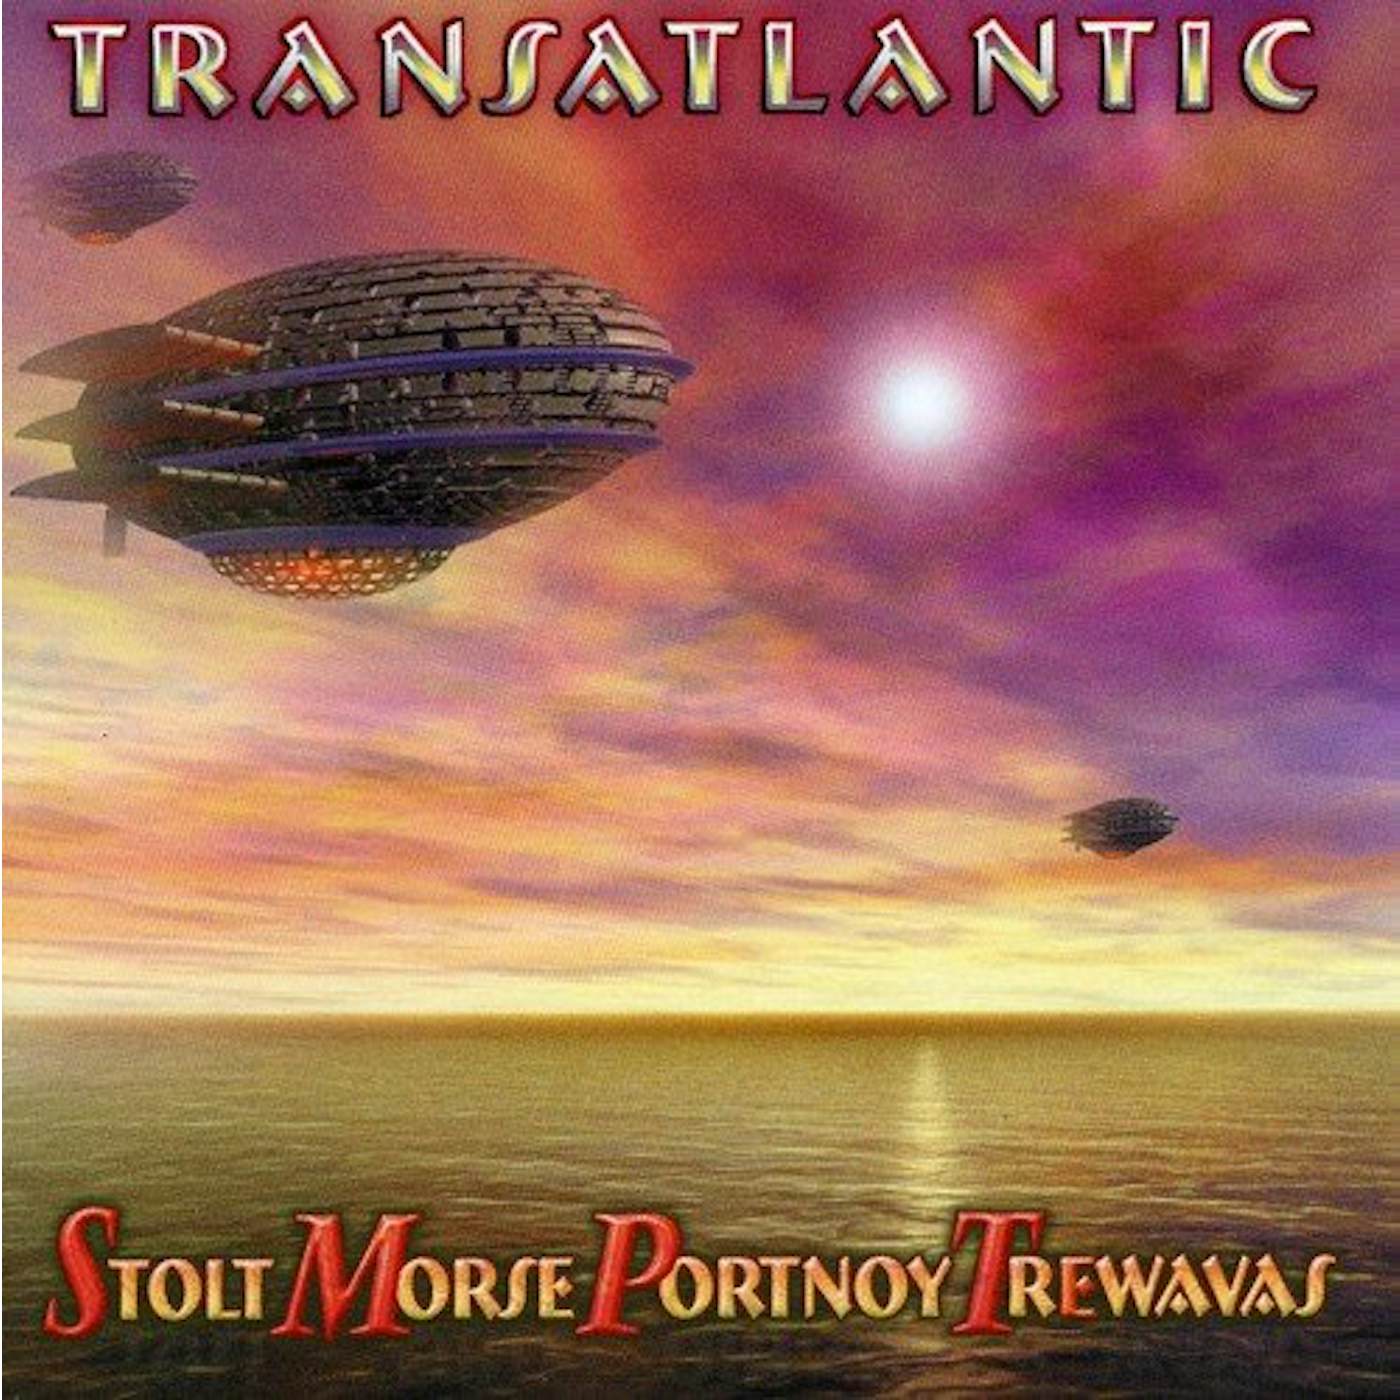 Transatlantic SMPTe Vinyl Record